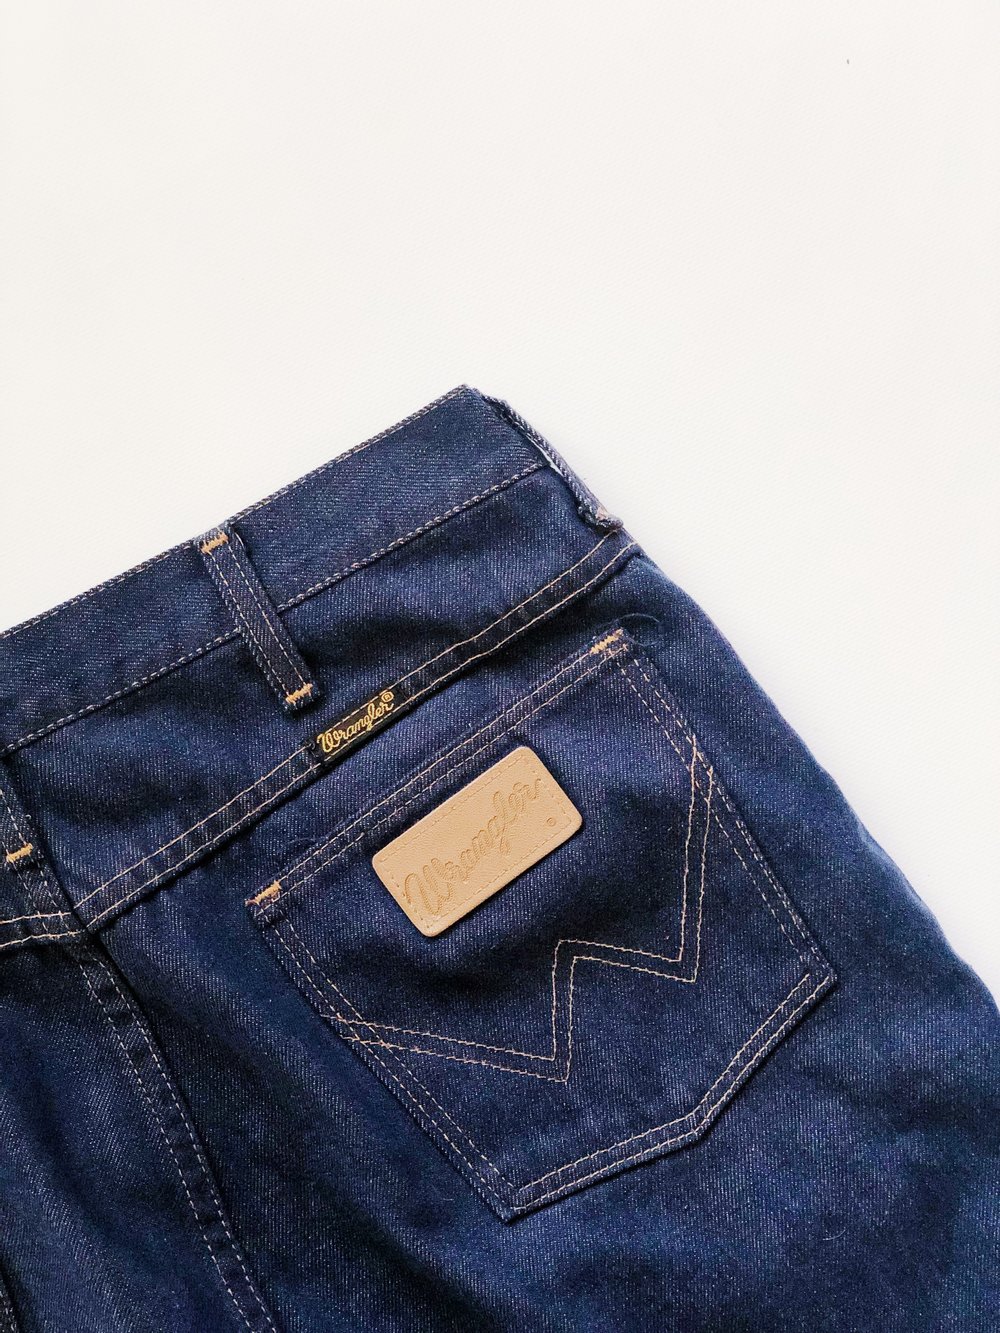 Wrangler jeans size 36x32 — Left Hand Twill